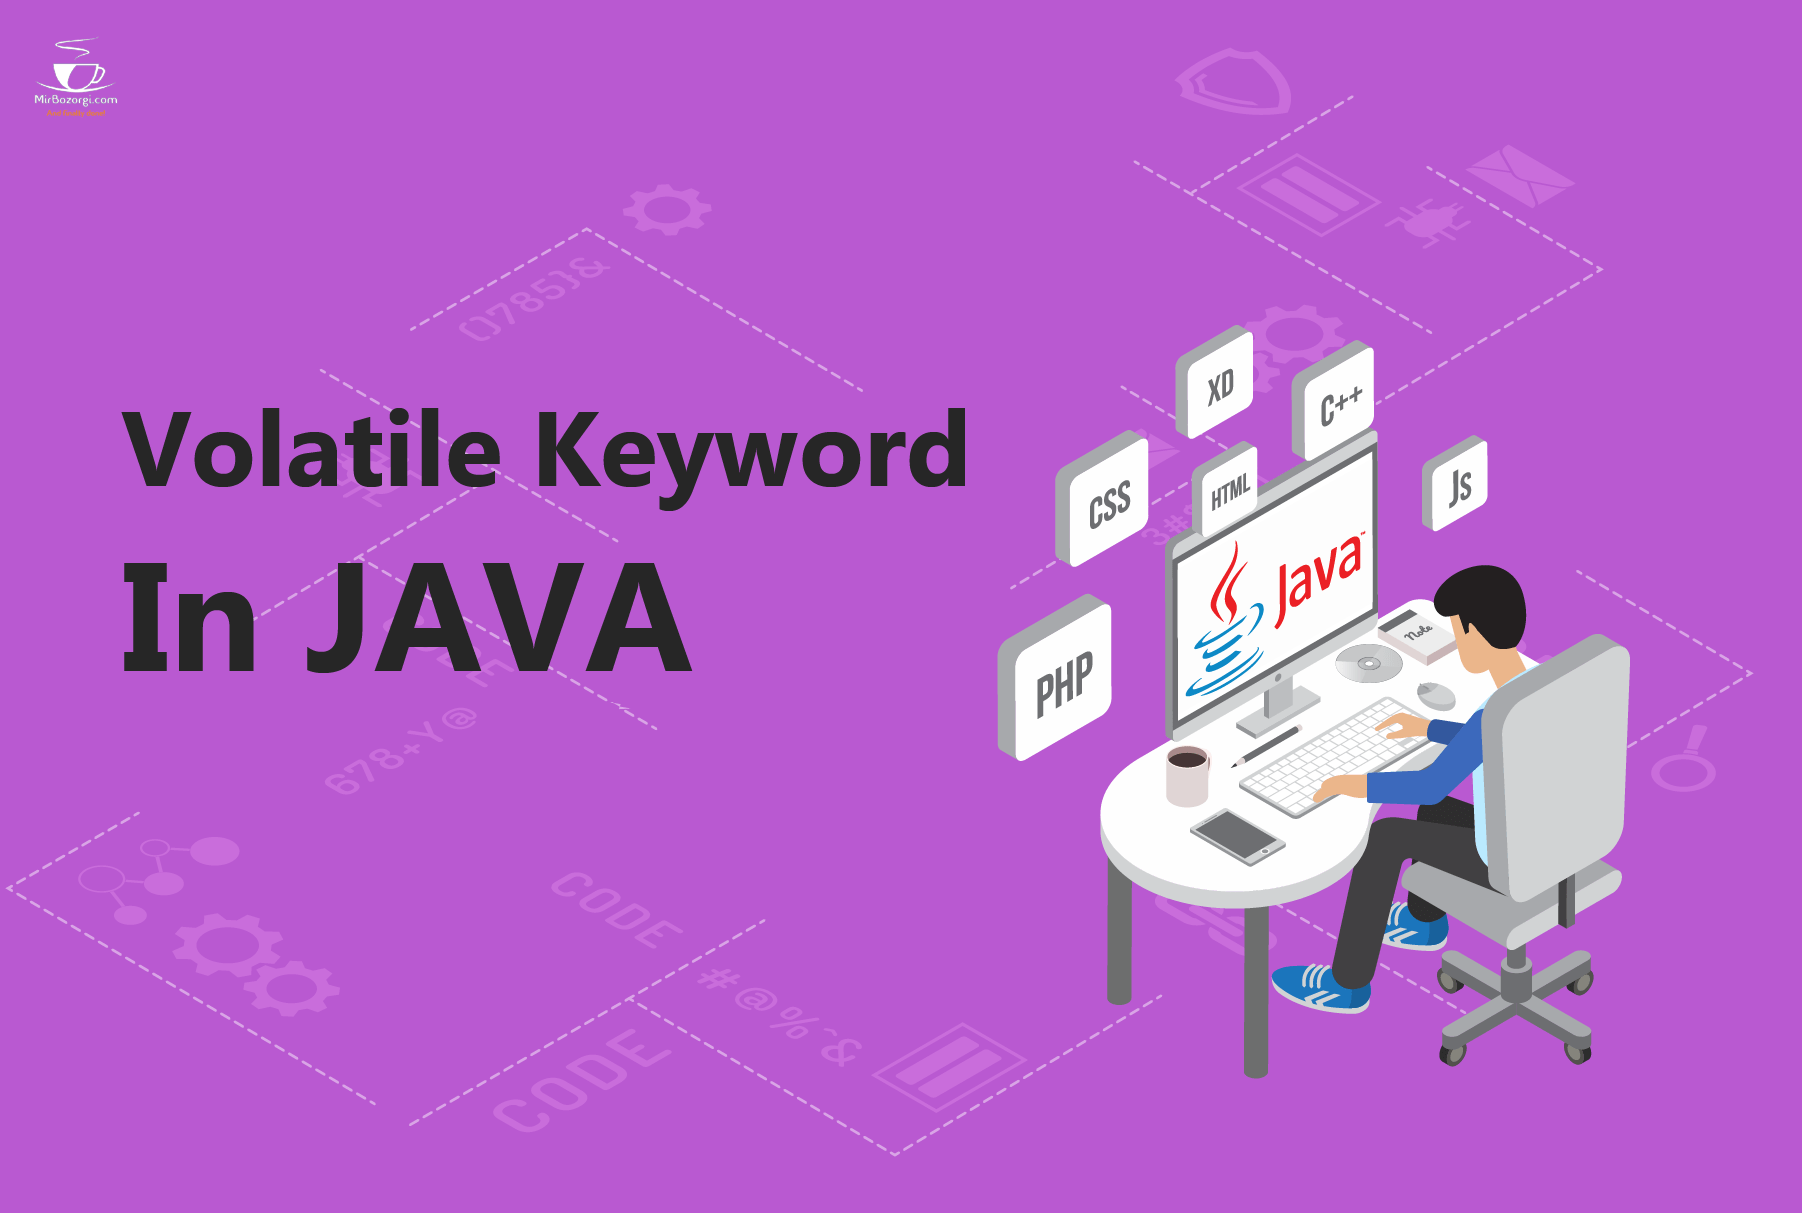 Volatile Keyword in Java